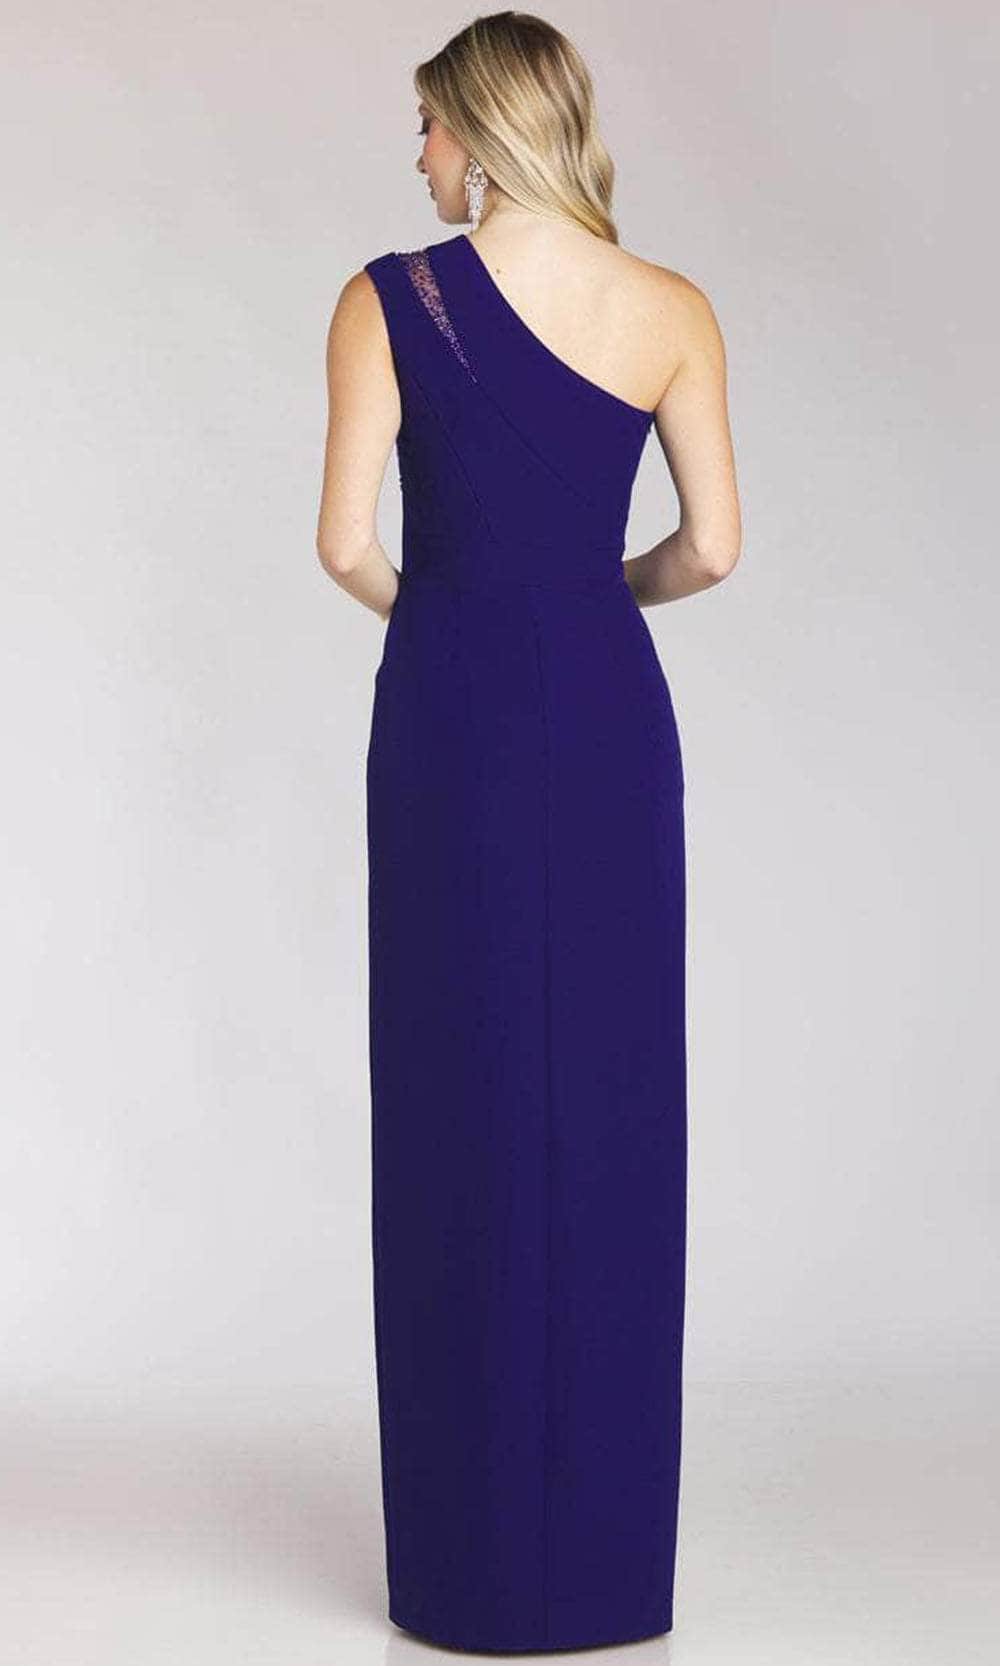 Gia Franco 12213 - One Shoulder Illusion Evening Dress Evening Dresses